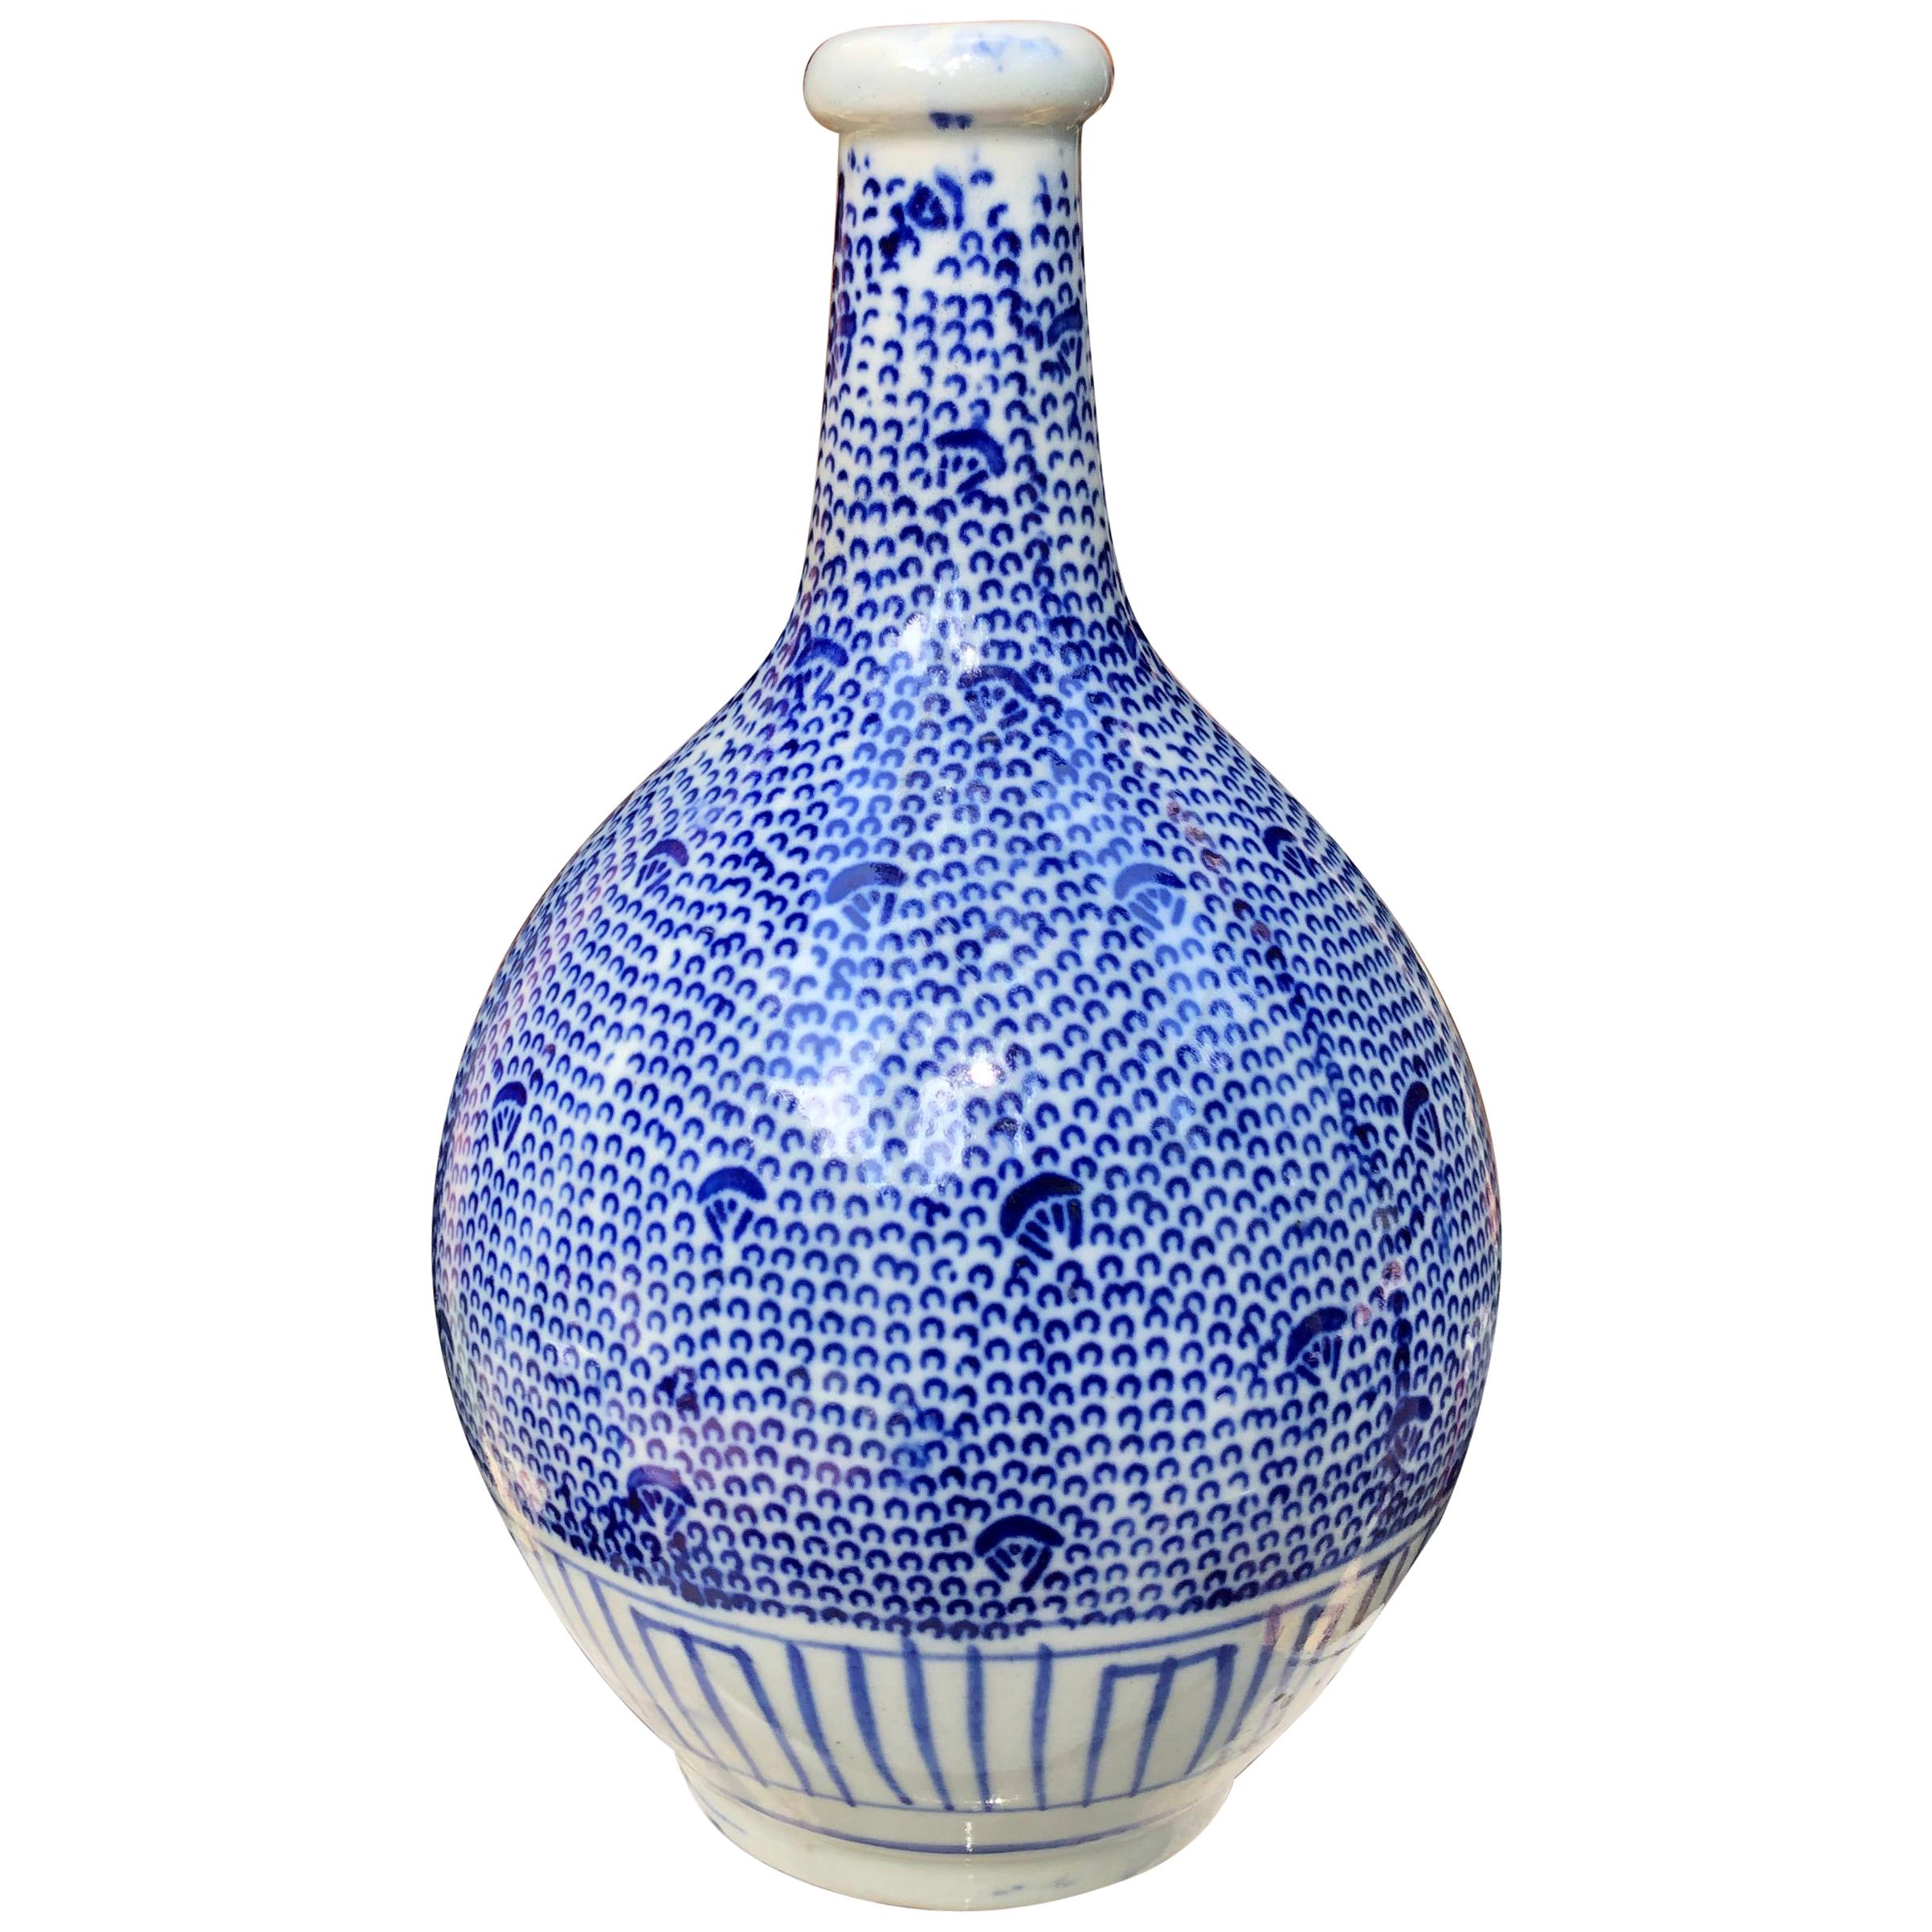 Japan Lovely Old Hand Painted Blue and White Bud Vase, Karakusa Vines, 1930